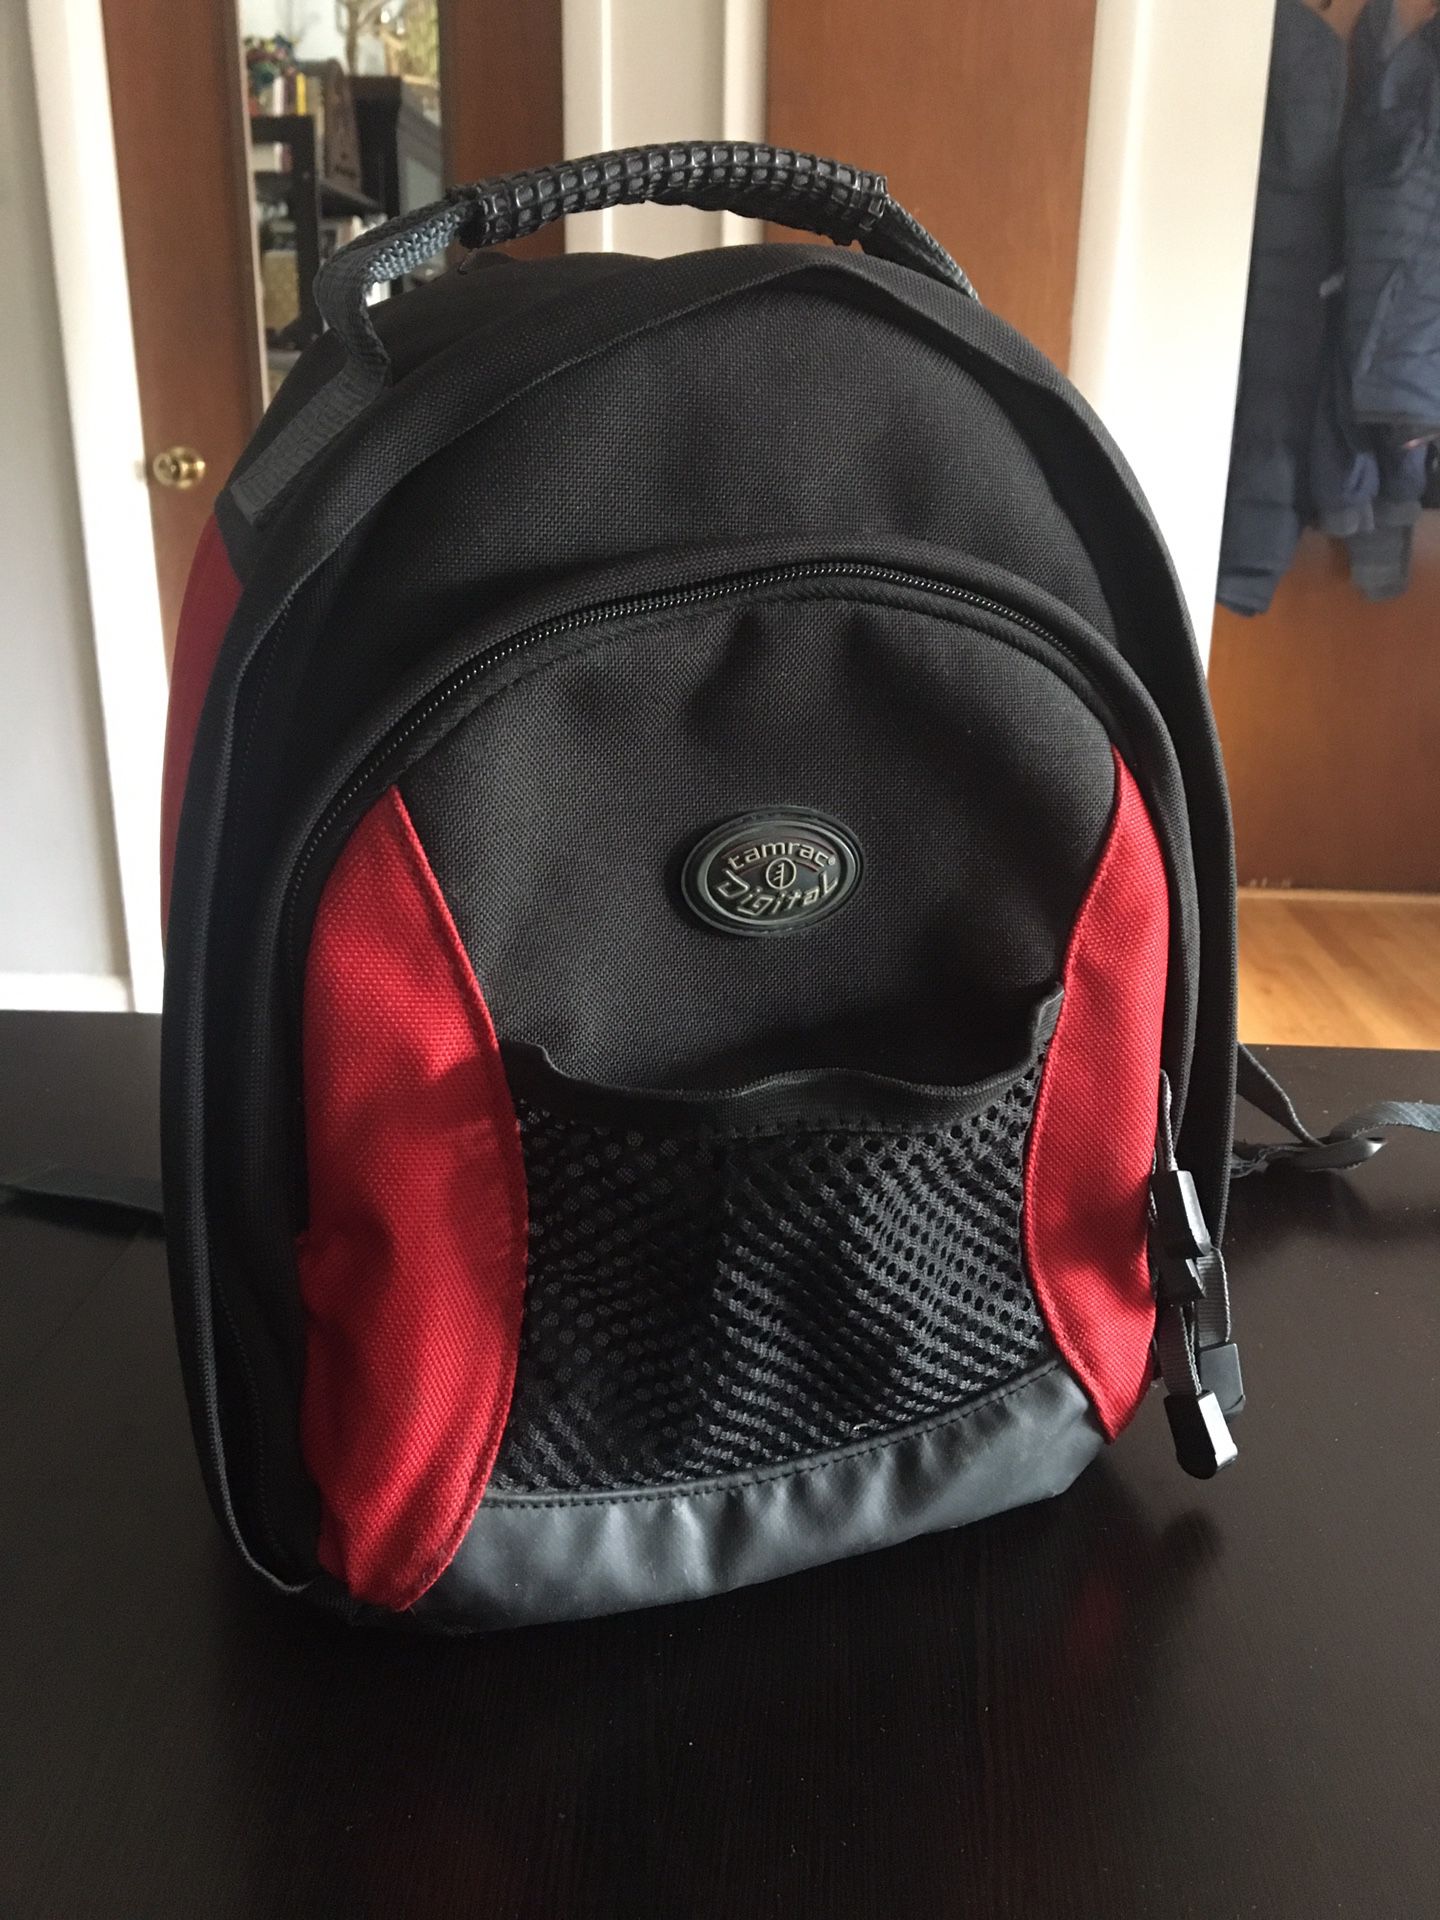 Tamrac Digital camera backpack padded black and red